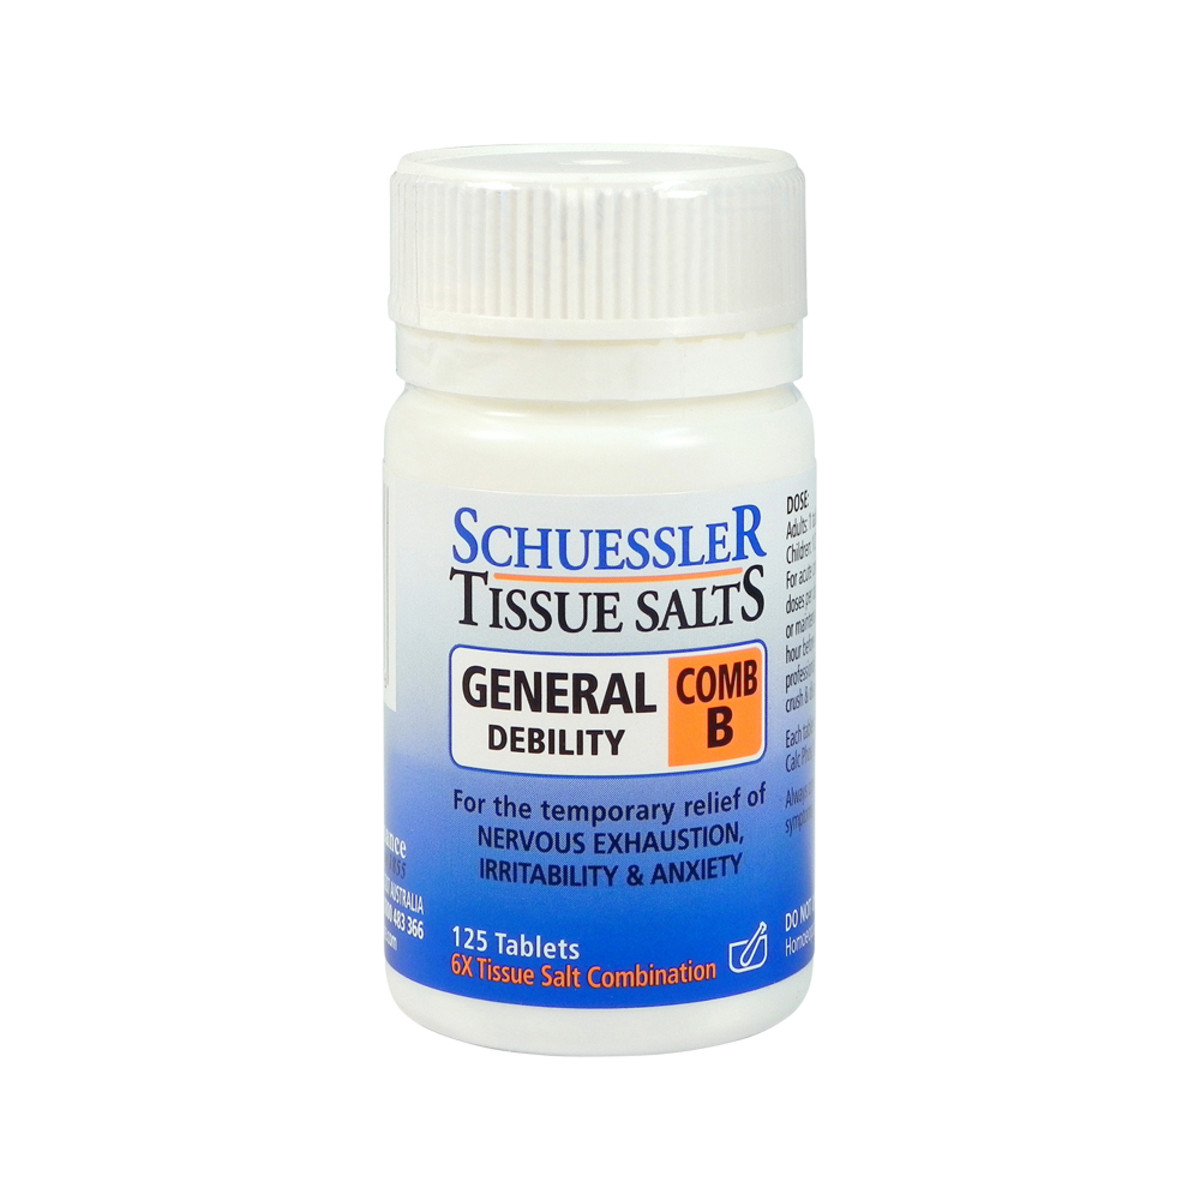 Schuessler Tissue Salts Comb B (General Debility) 125t